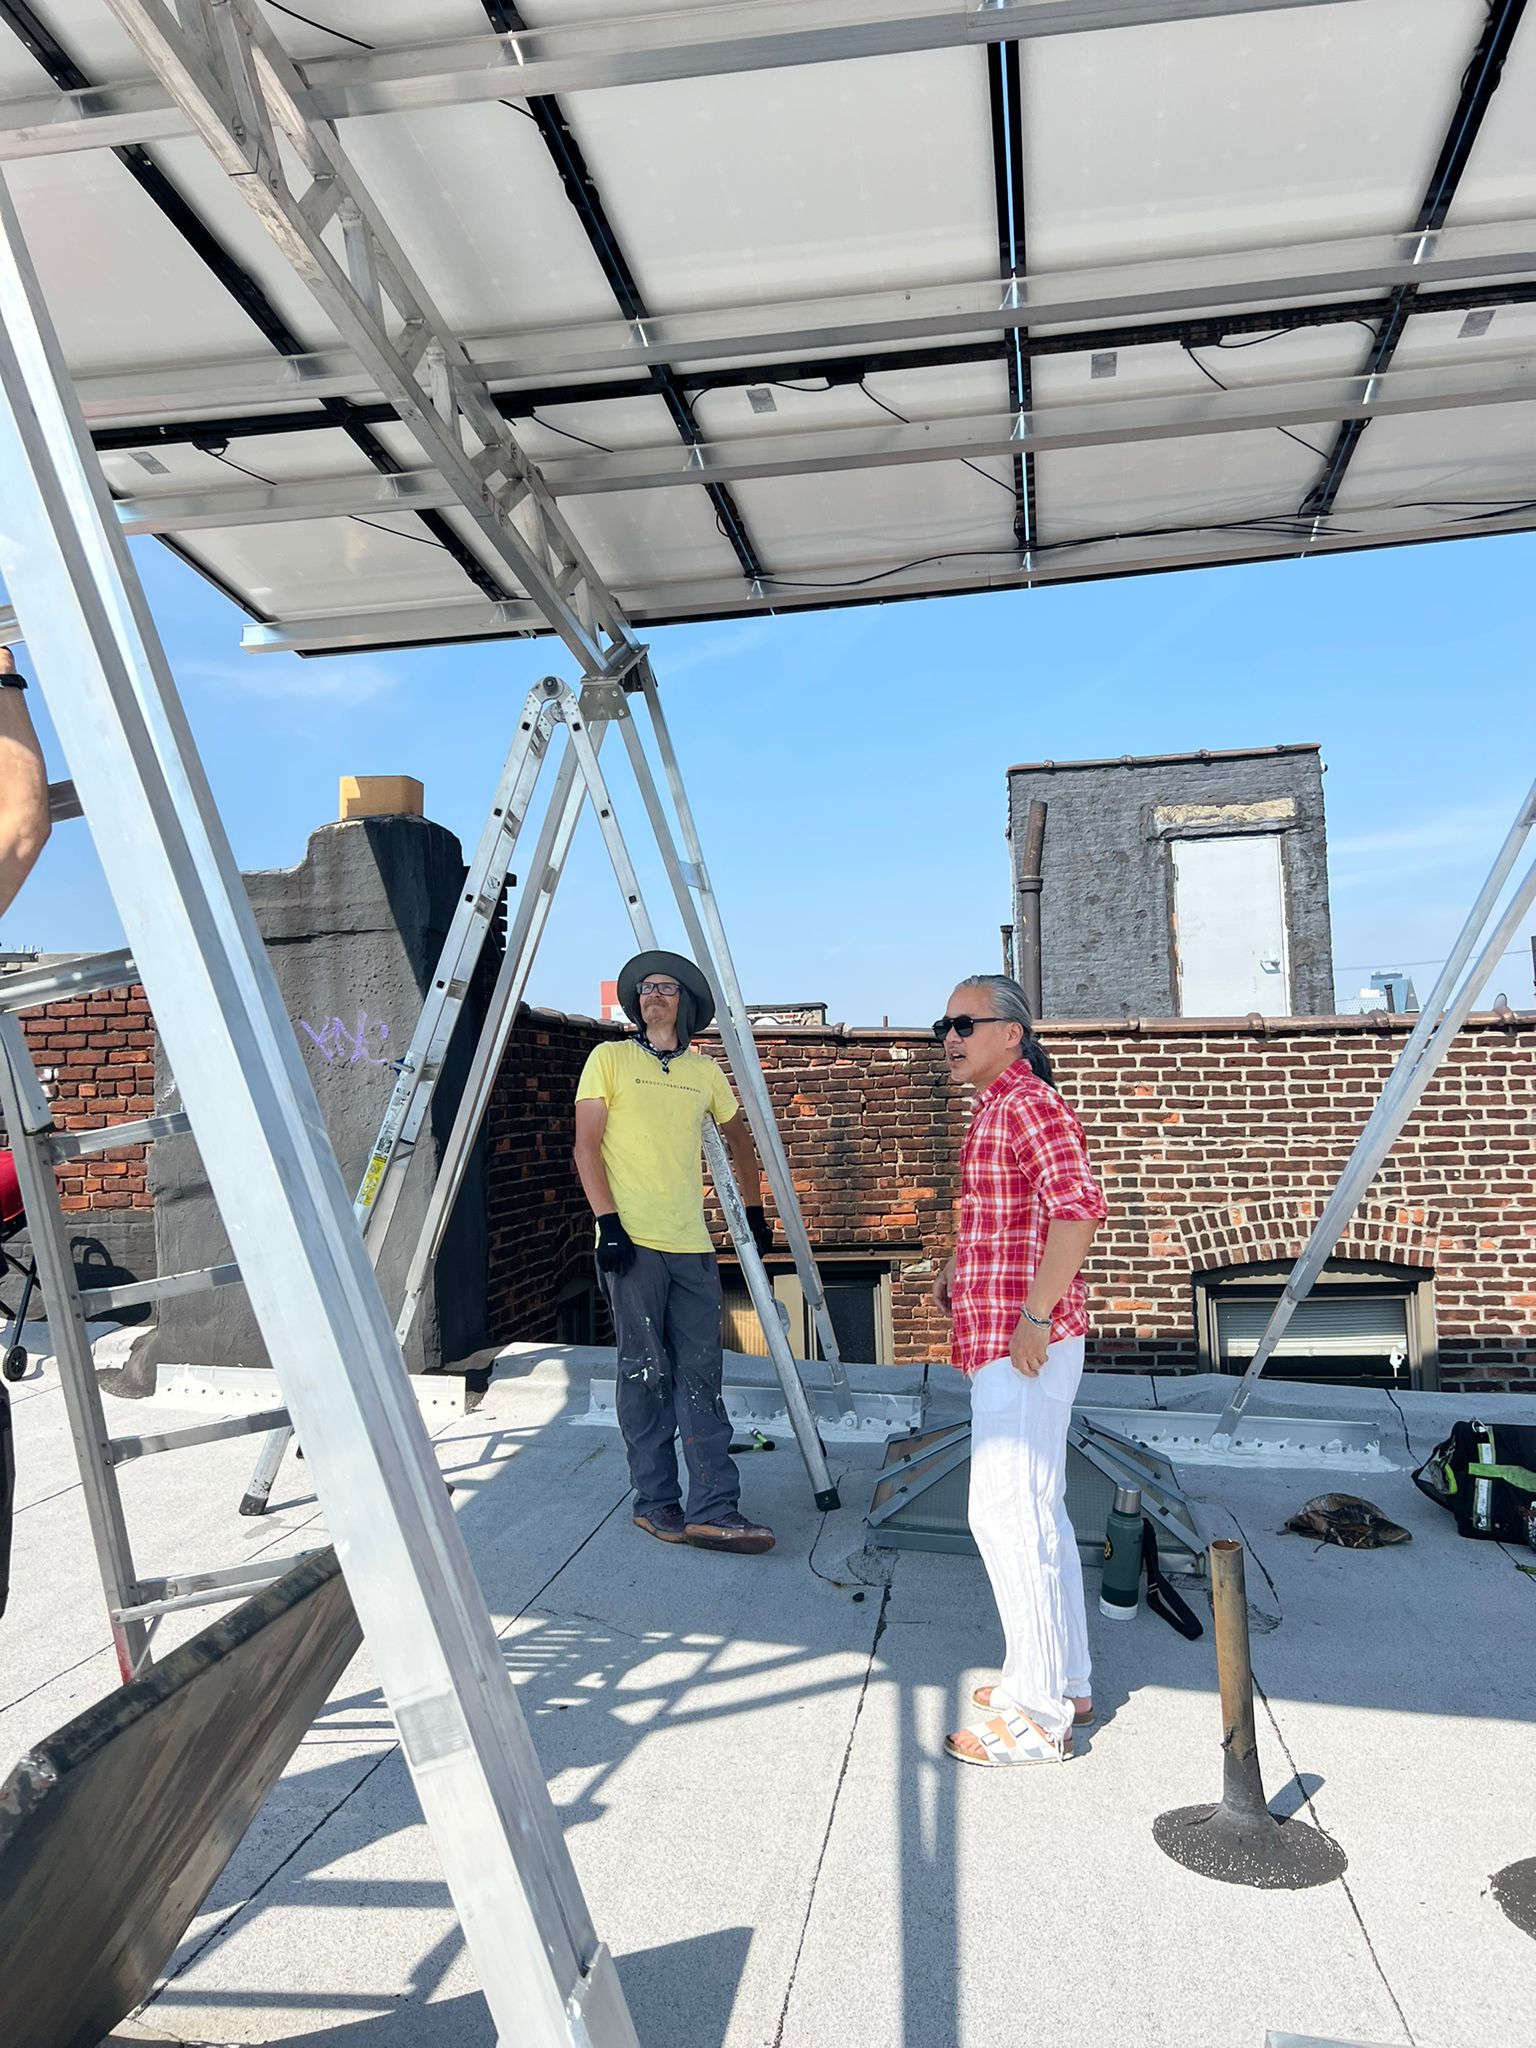 Installing solar panels in Brooklyn